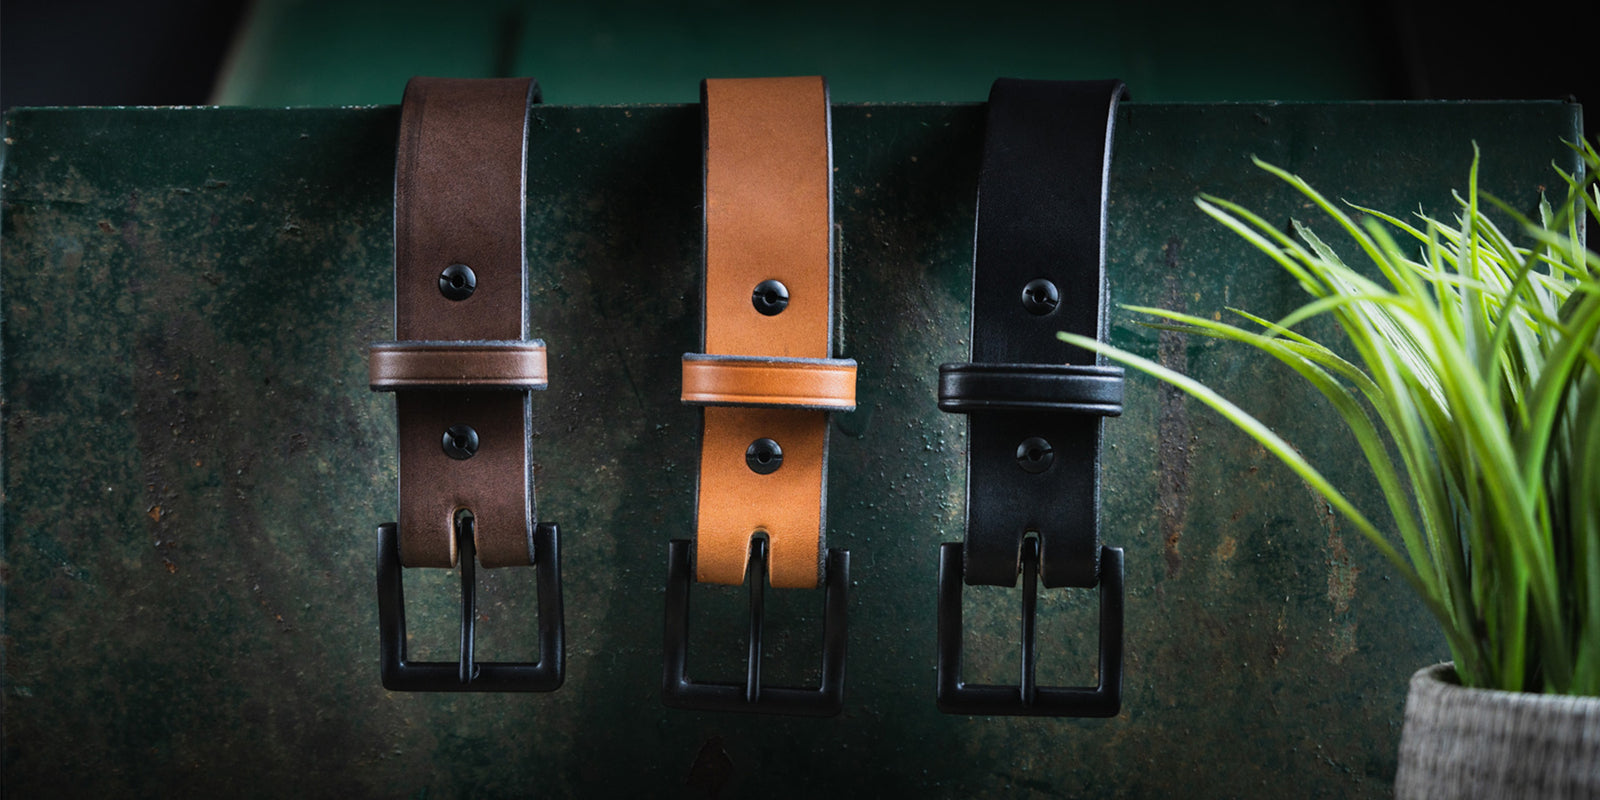 Gelante Genuine Full Grain Leather Belt Strap Without Belt Buckle